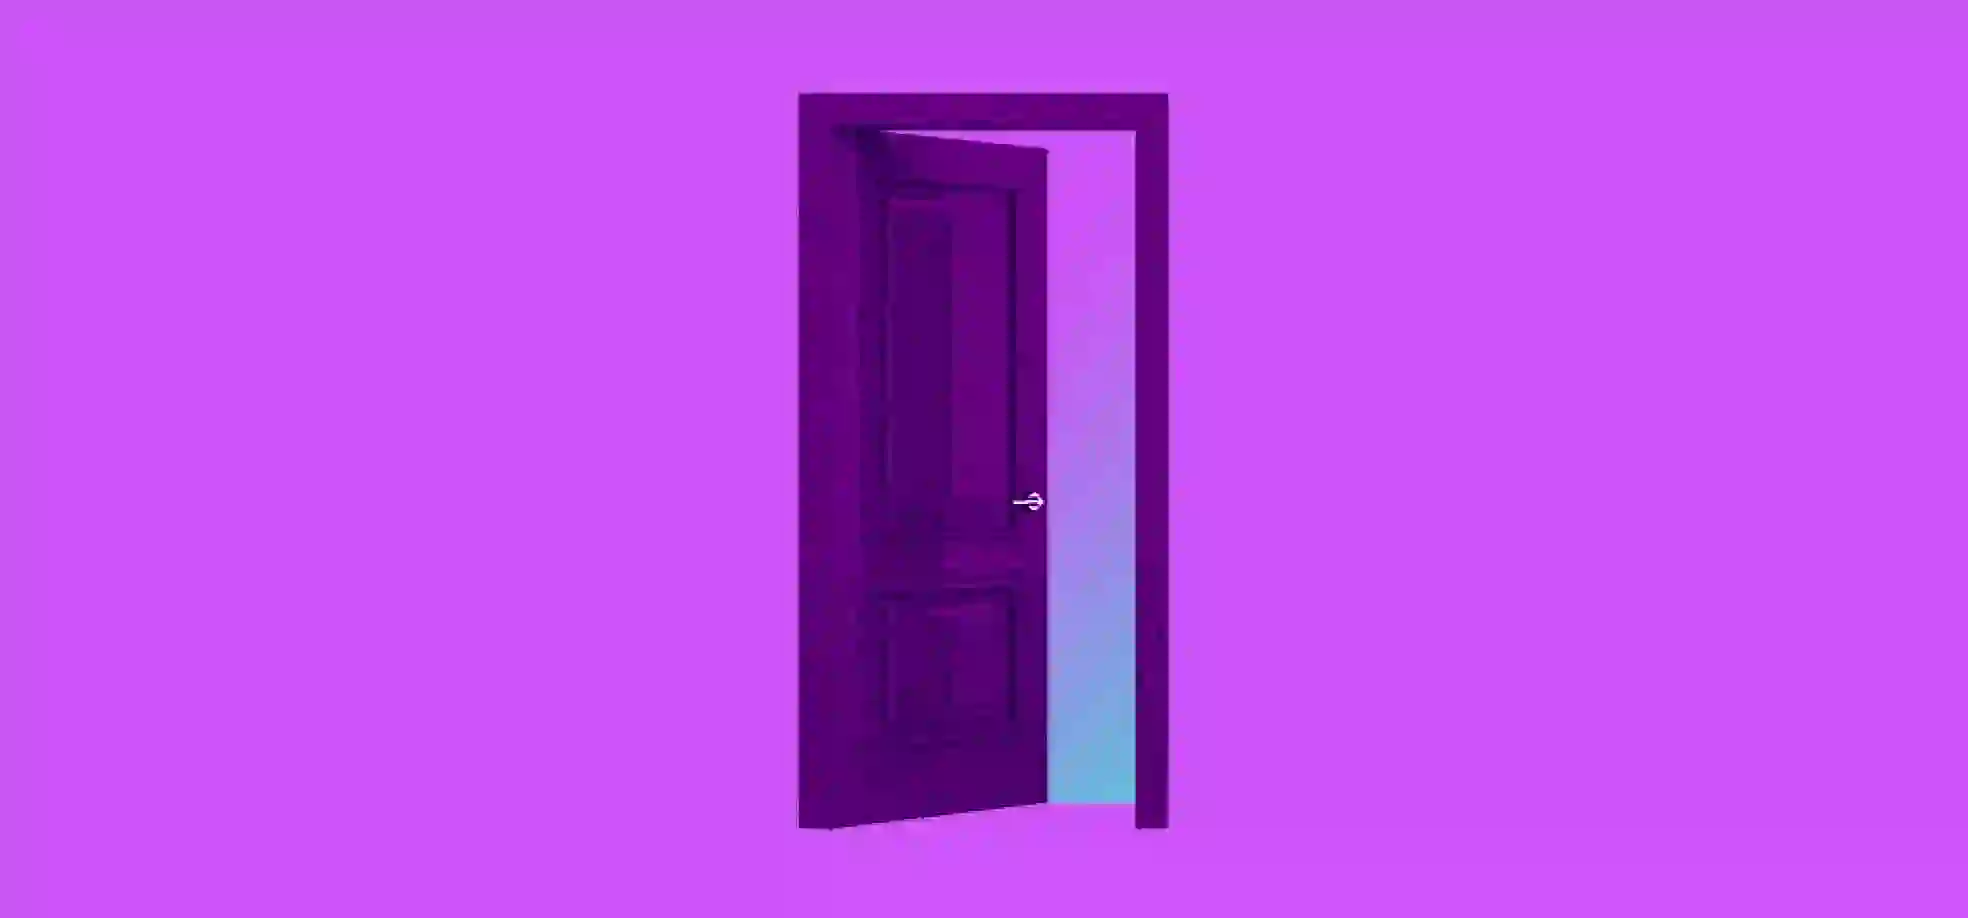 an open purple door illustration on a purple background